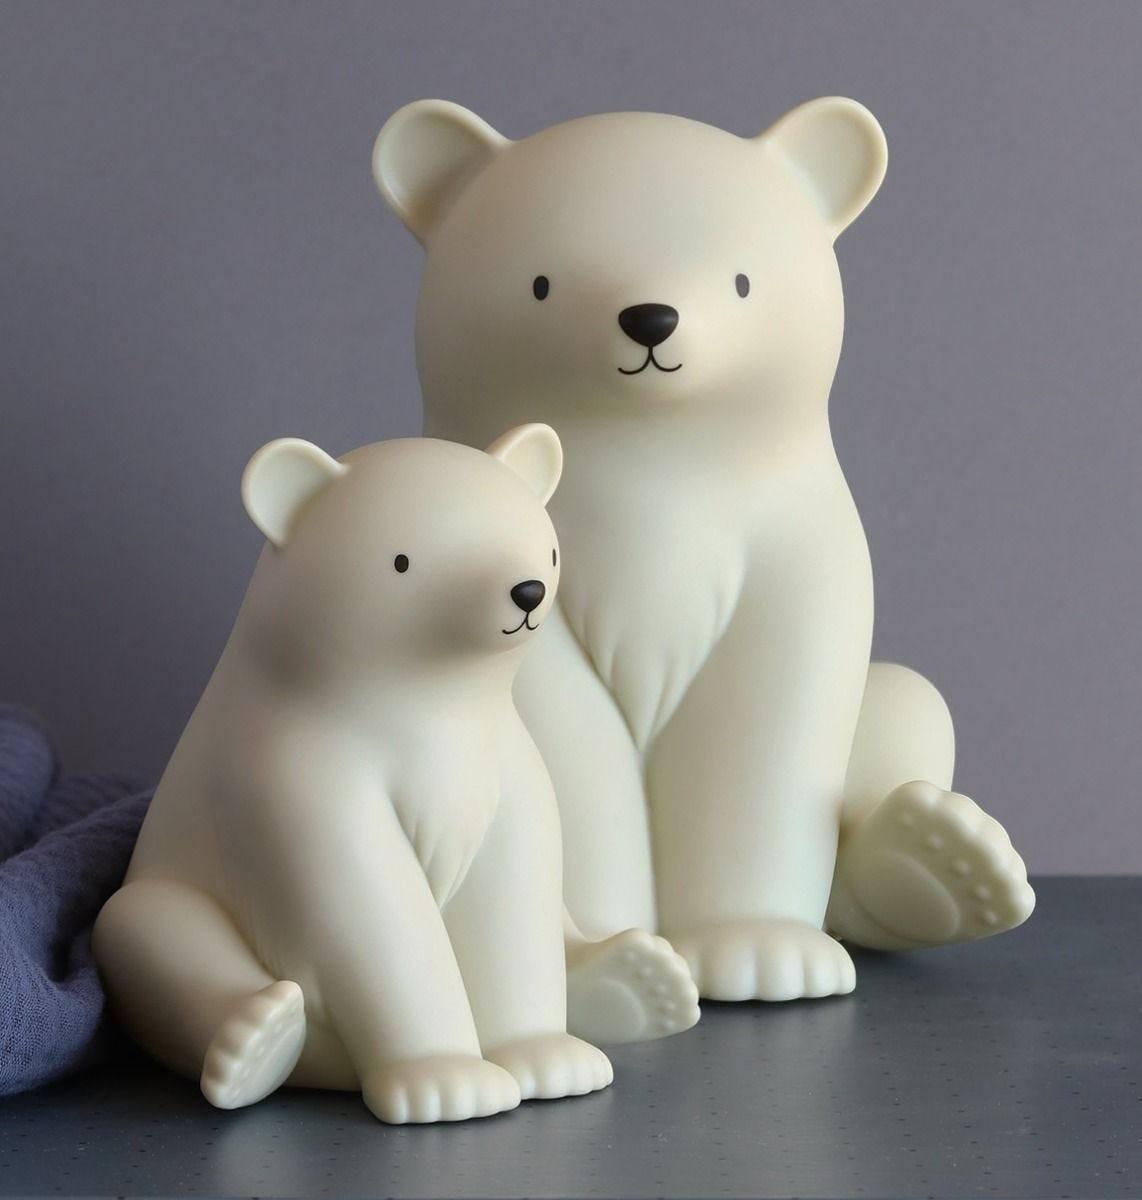 A Little Lovely Company - Little Light Polar Bear